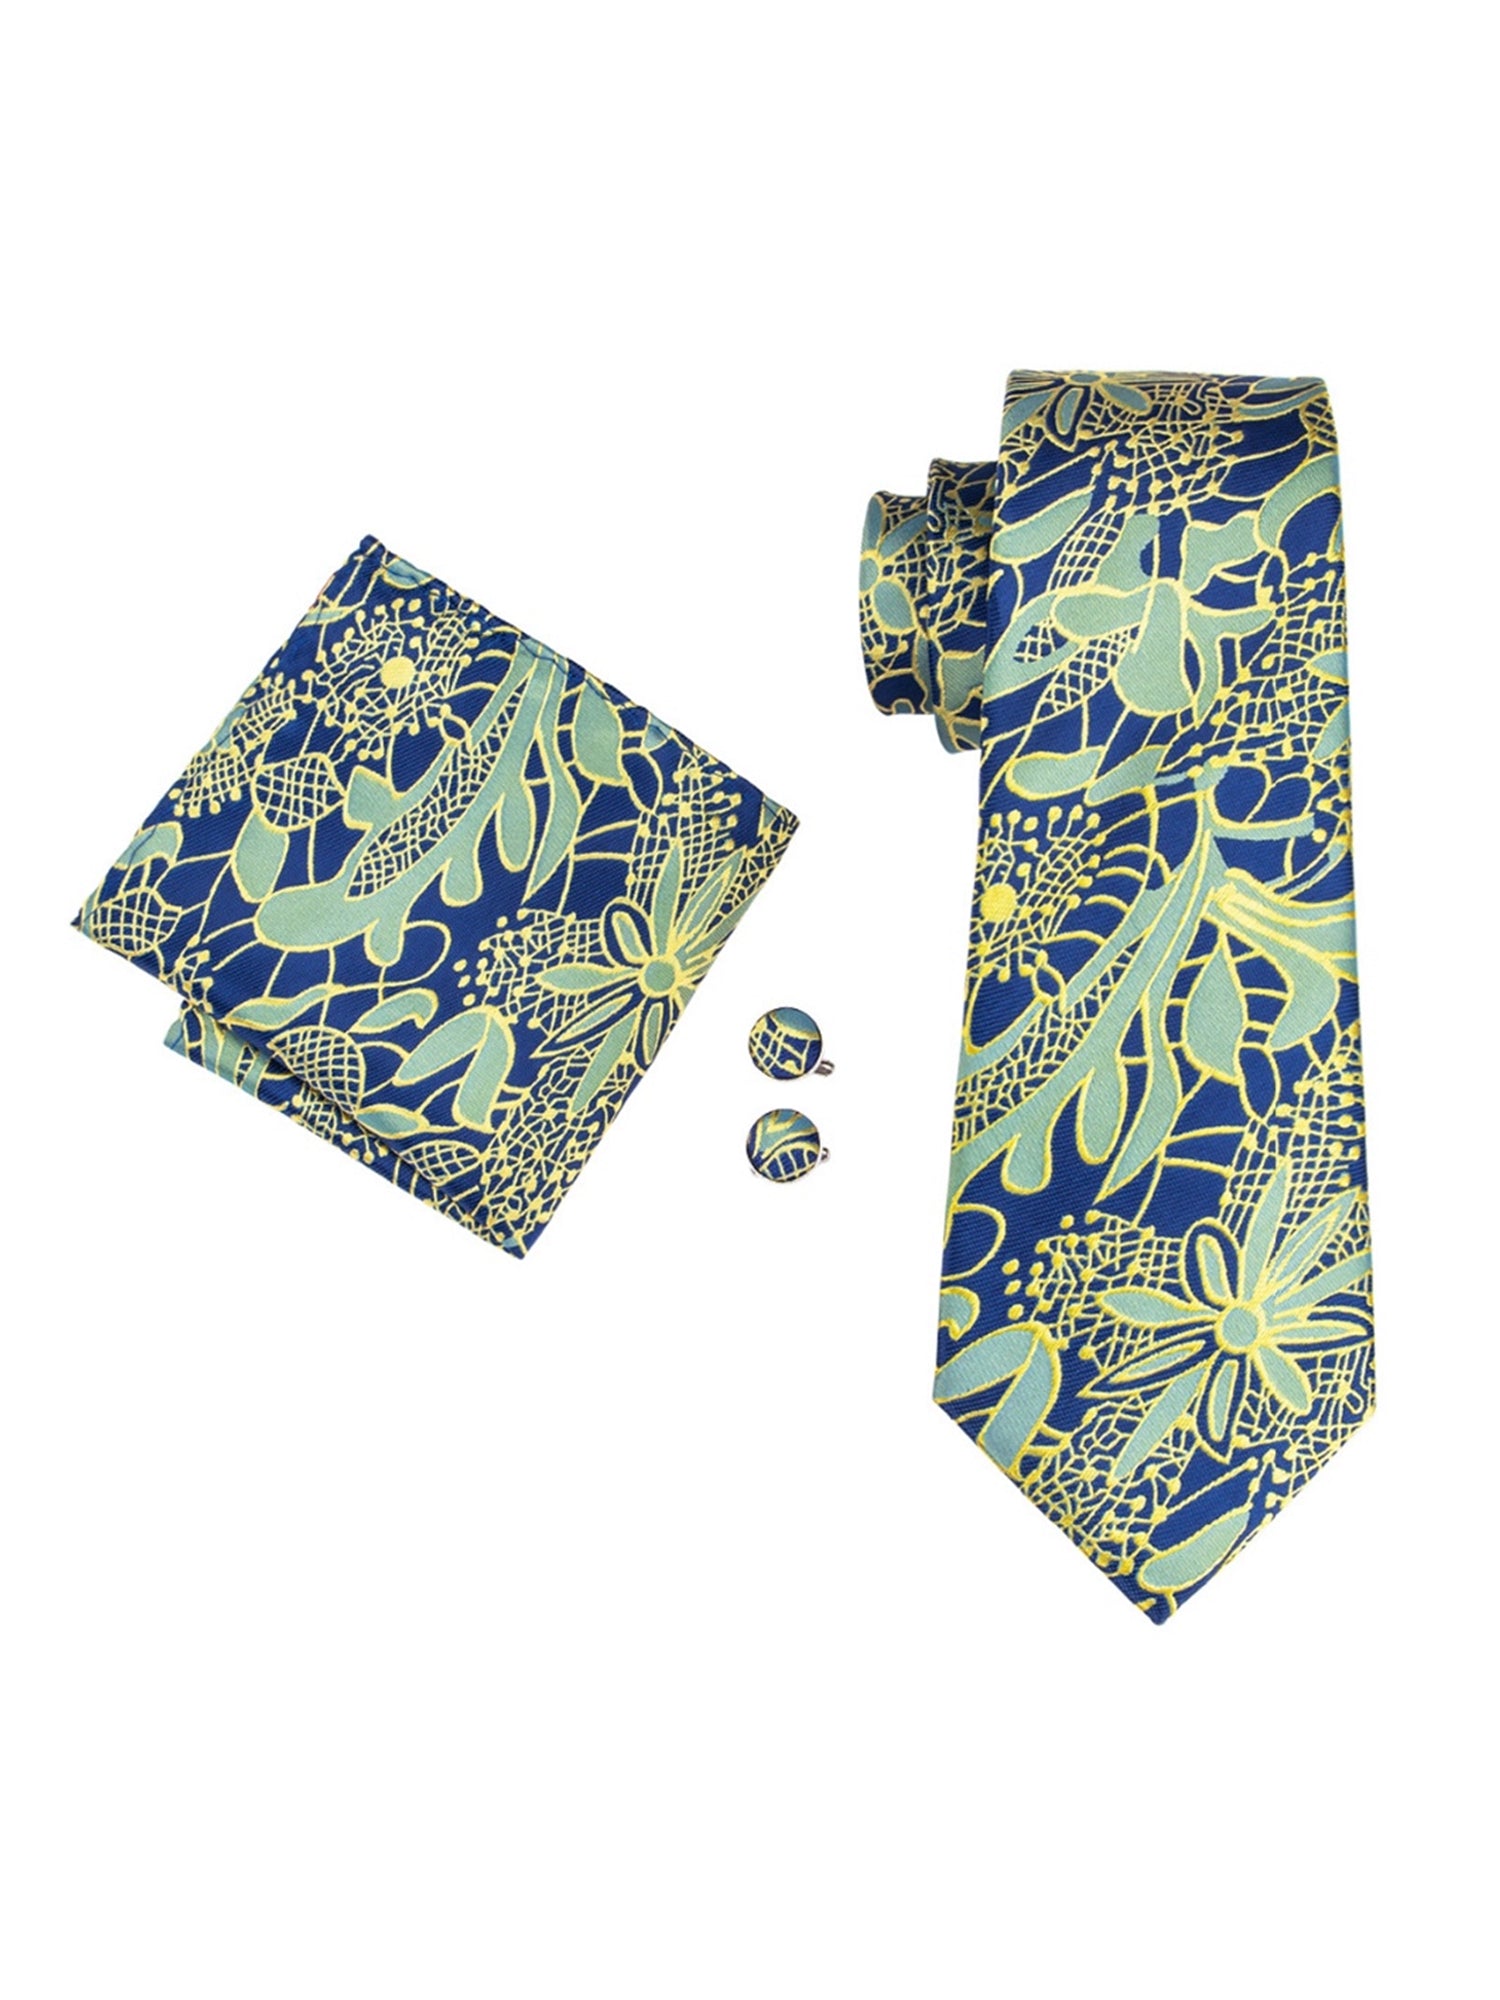 Men's Blue Yellow & Green Paisley Silk Neck tie Hanky Cufflinks Set Neck Tie TheDapperTie Blue Yellow & Green 59 Inch X 3.4 Inch 